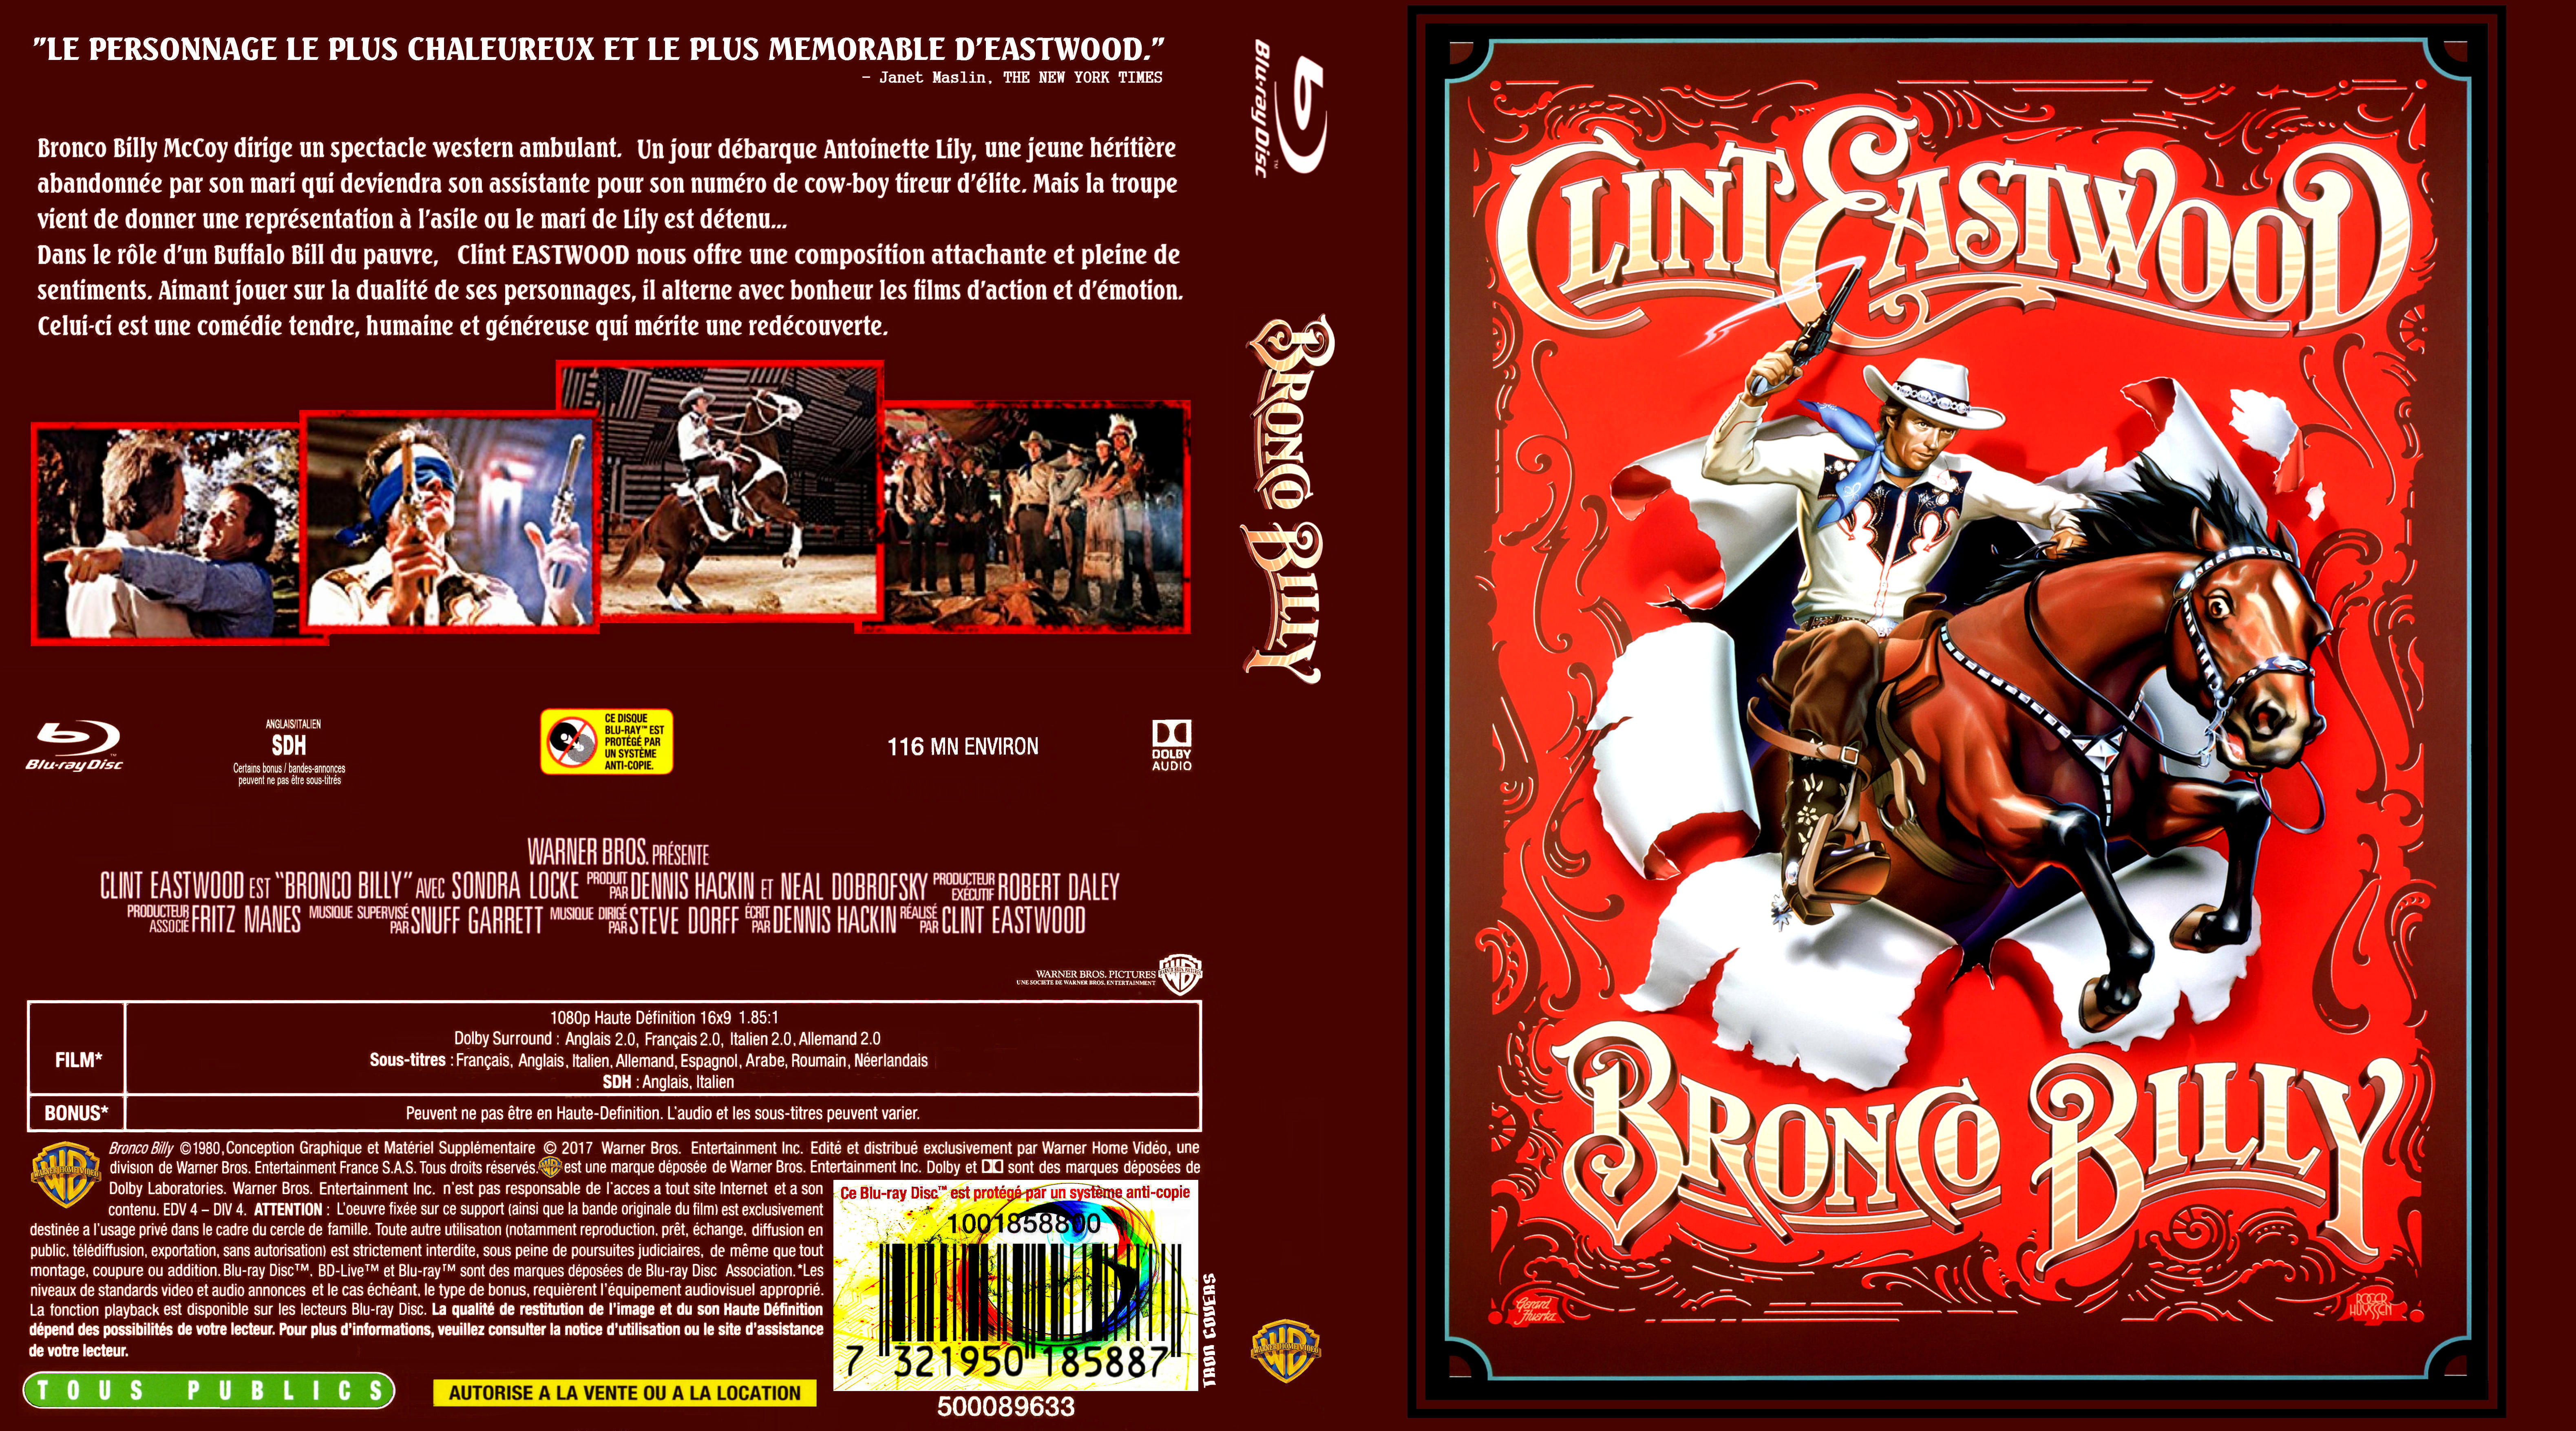 Jaquette DVD Bronco Billy custom (BLU-RAY) v2